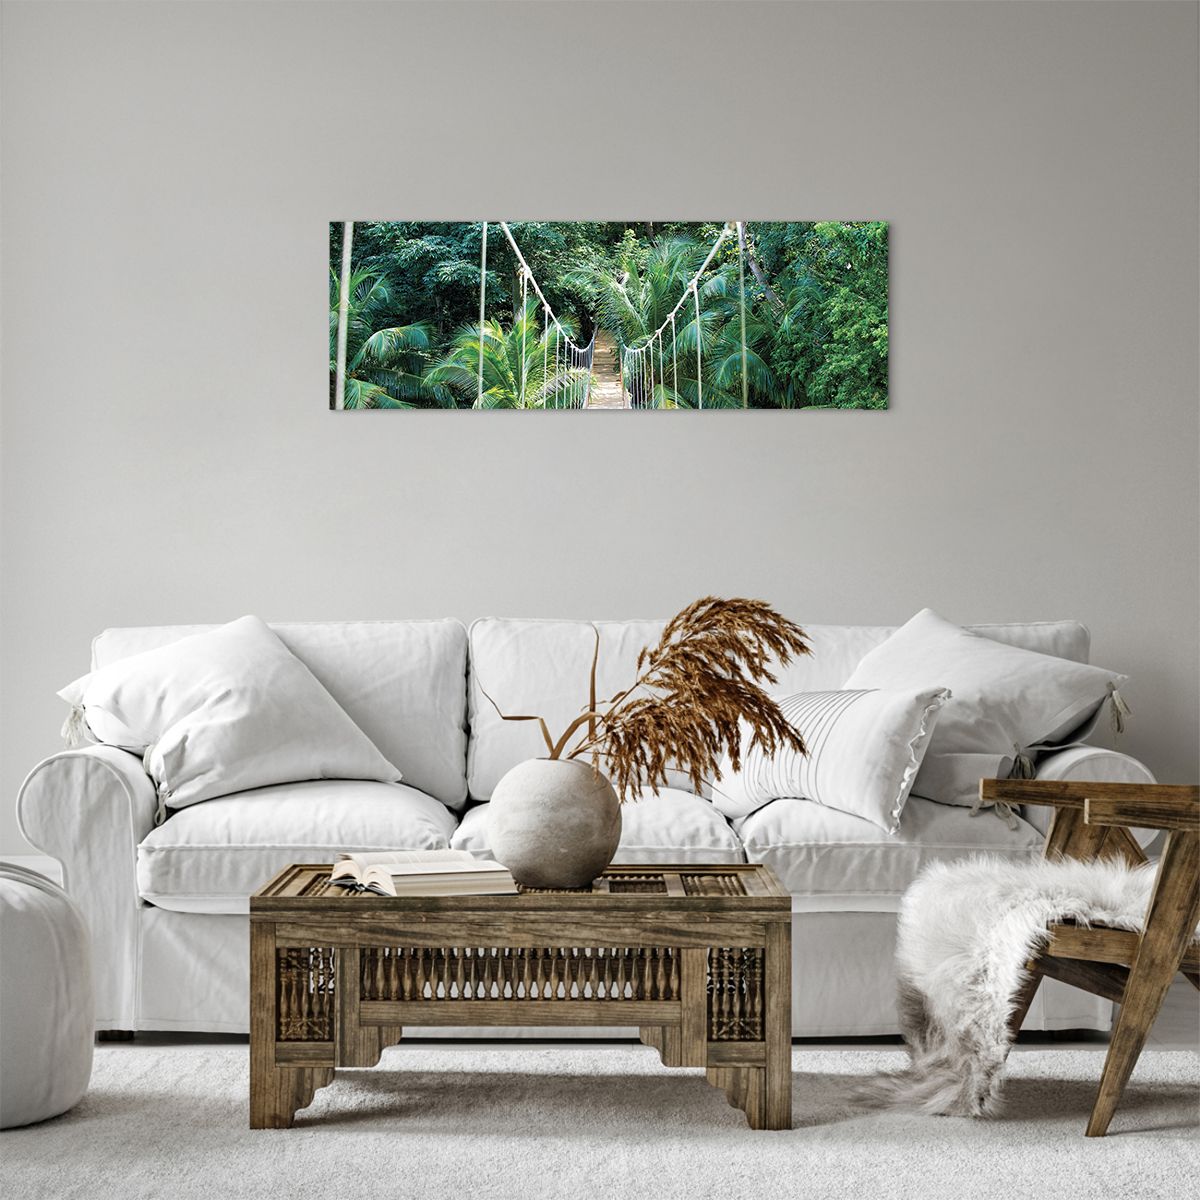 Quadro su tela Paesaggio, Quadro su tela Giungla, Quadro su tela Honduras, Quadro su tela Ponte Sospeso, Quadro su tela Natura